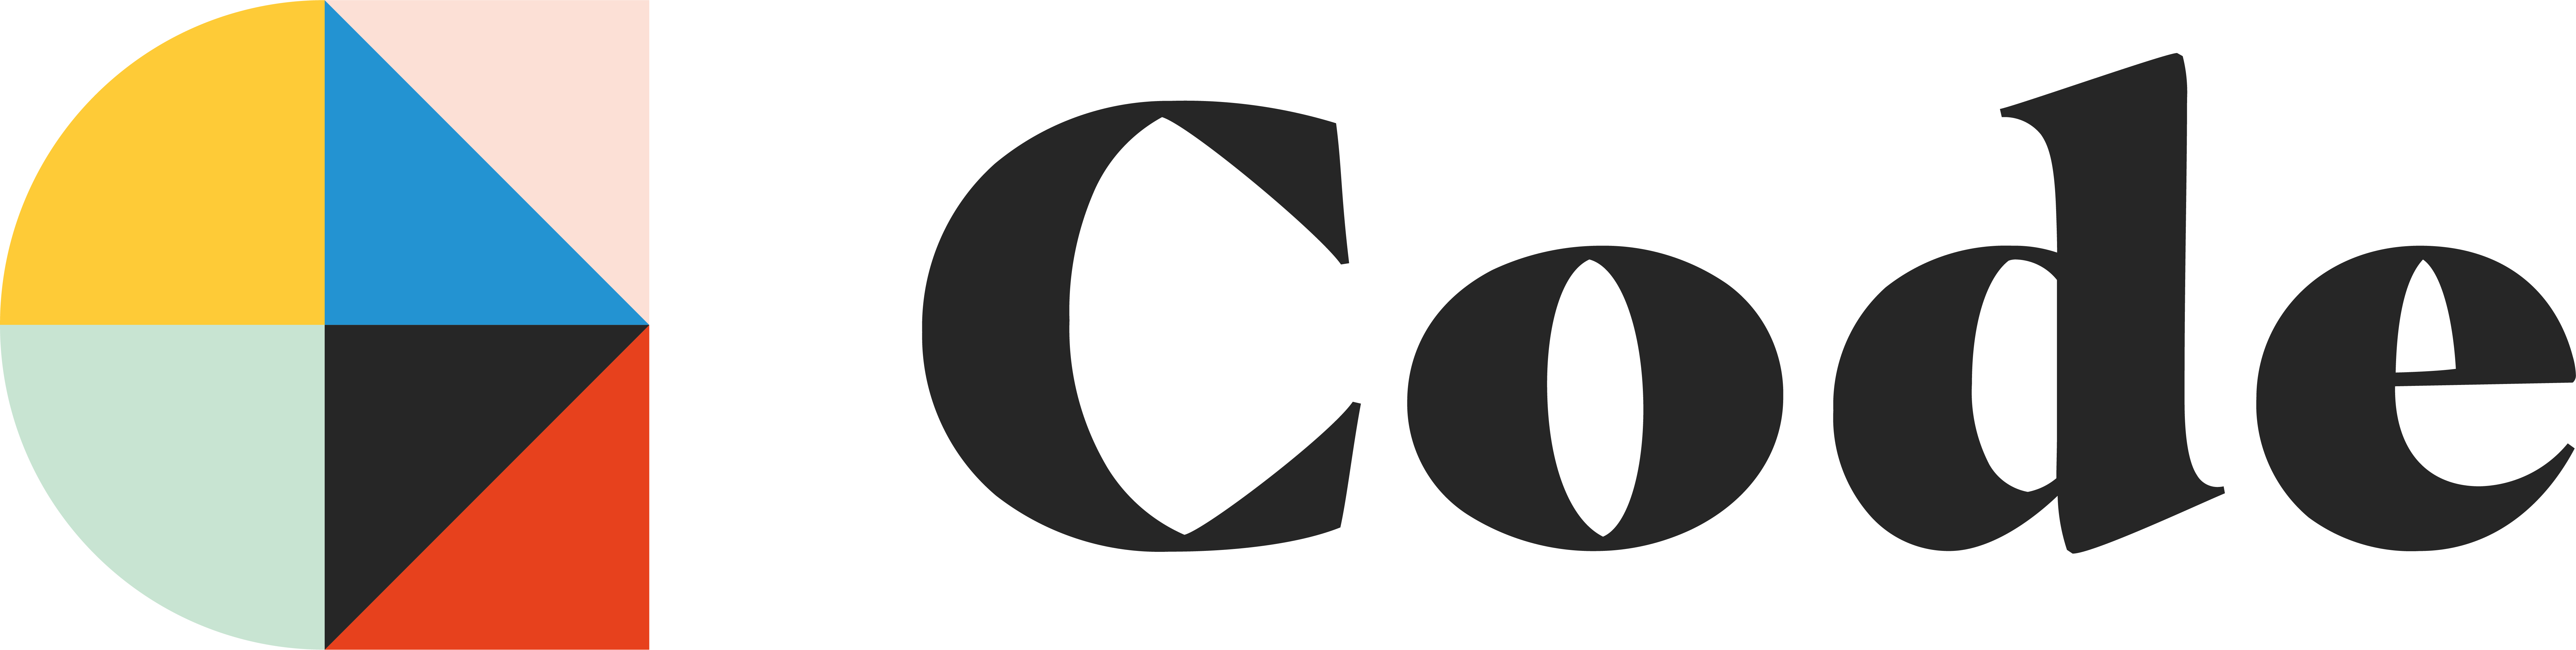 code logo partner monta